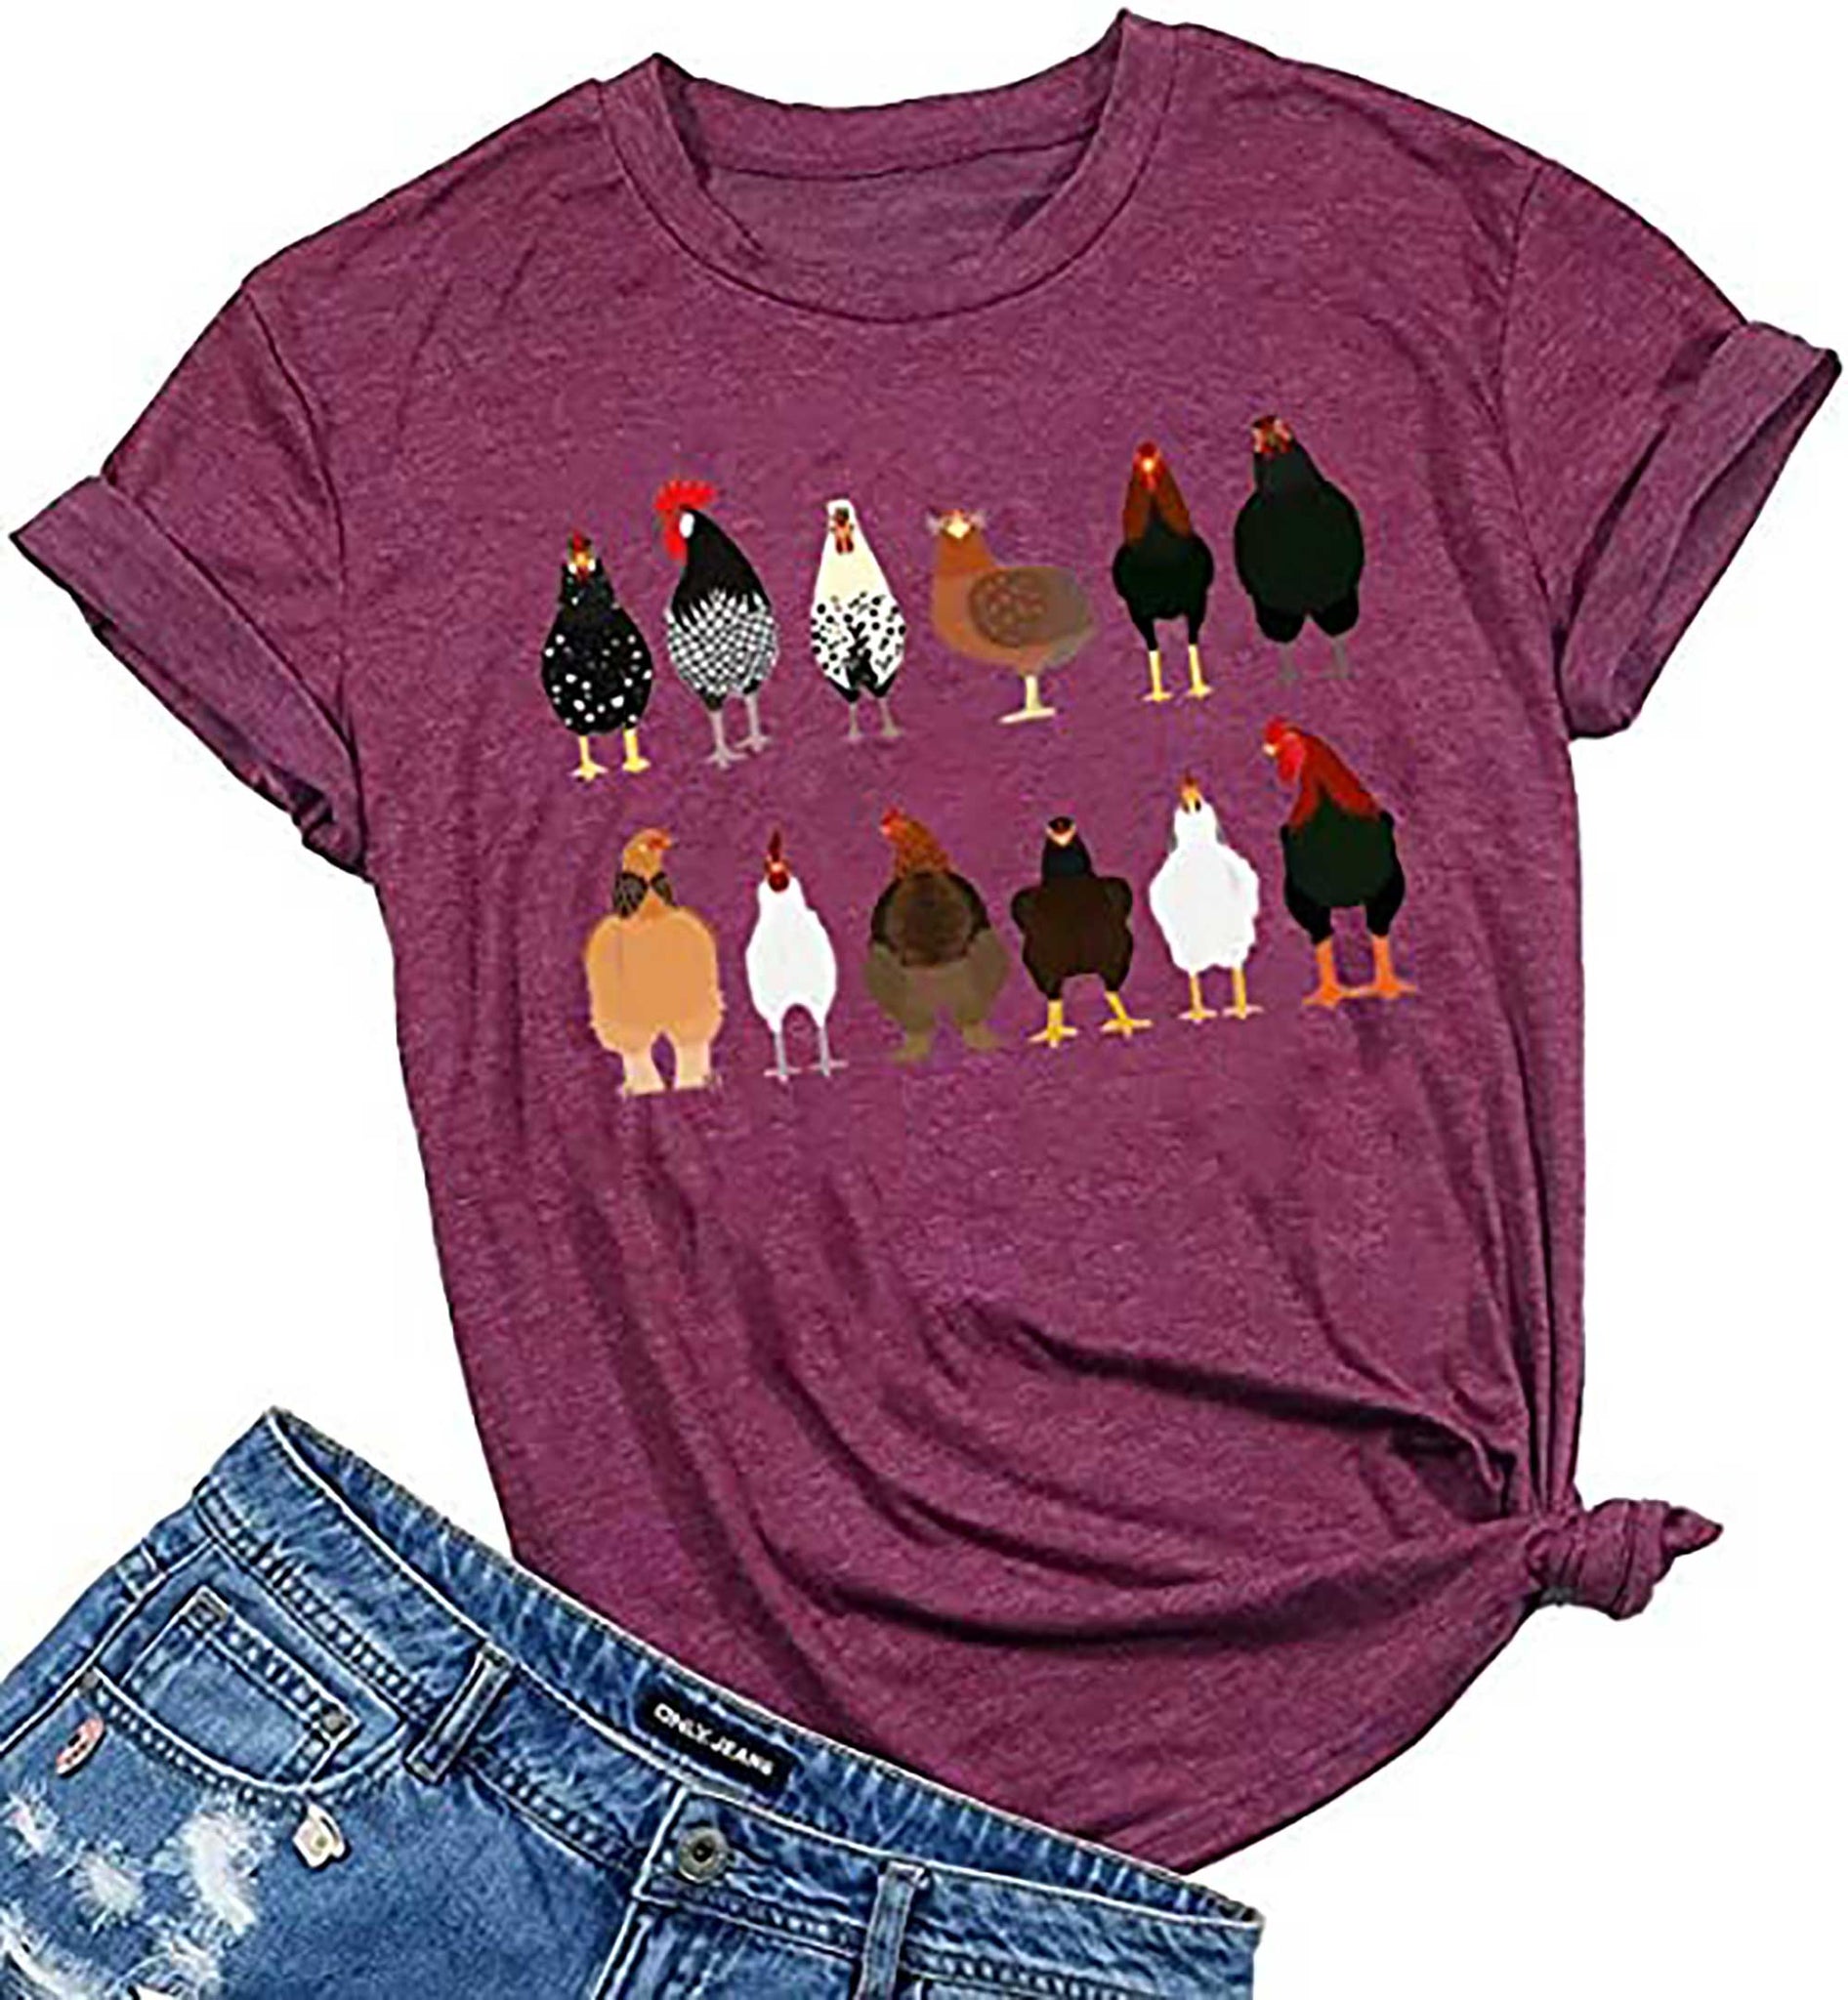 Skitongift Animal Lover T Shirt Funny Cute Short Sleeve Dog Graphic Tees Tops